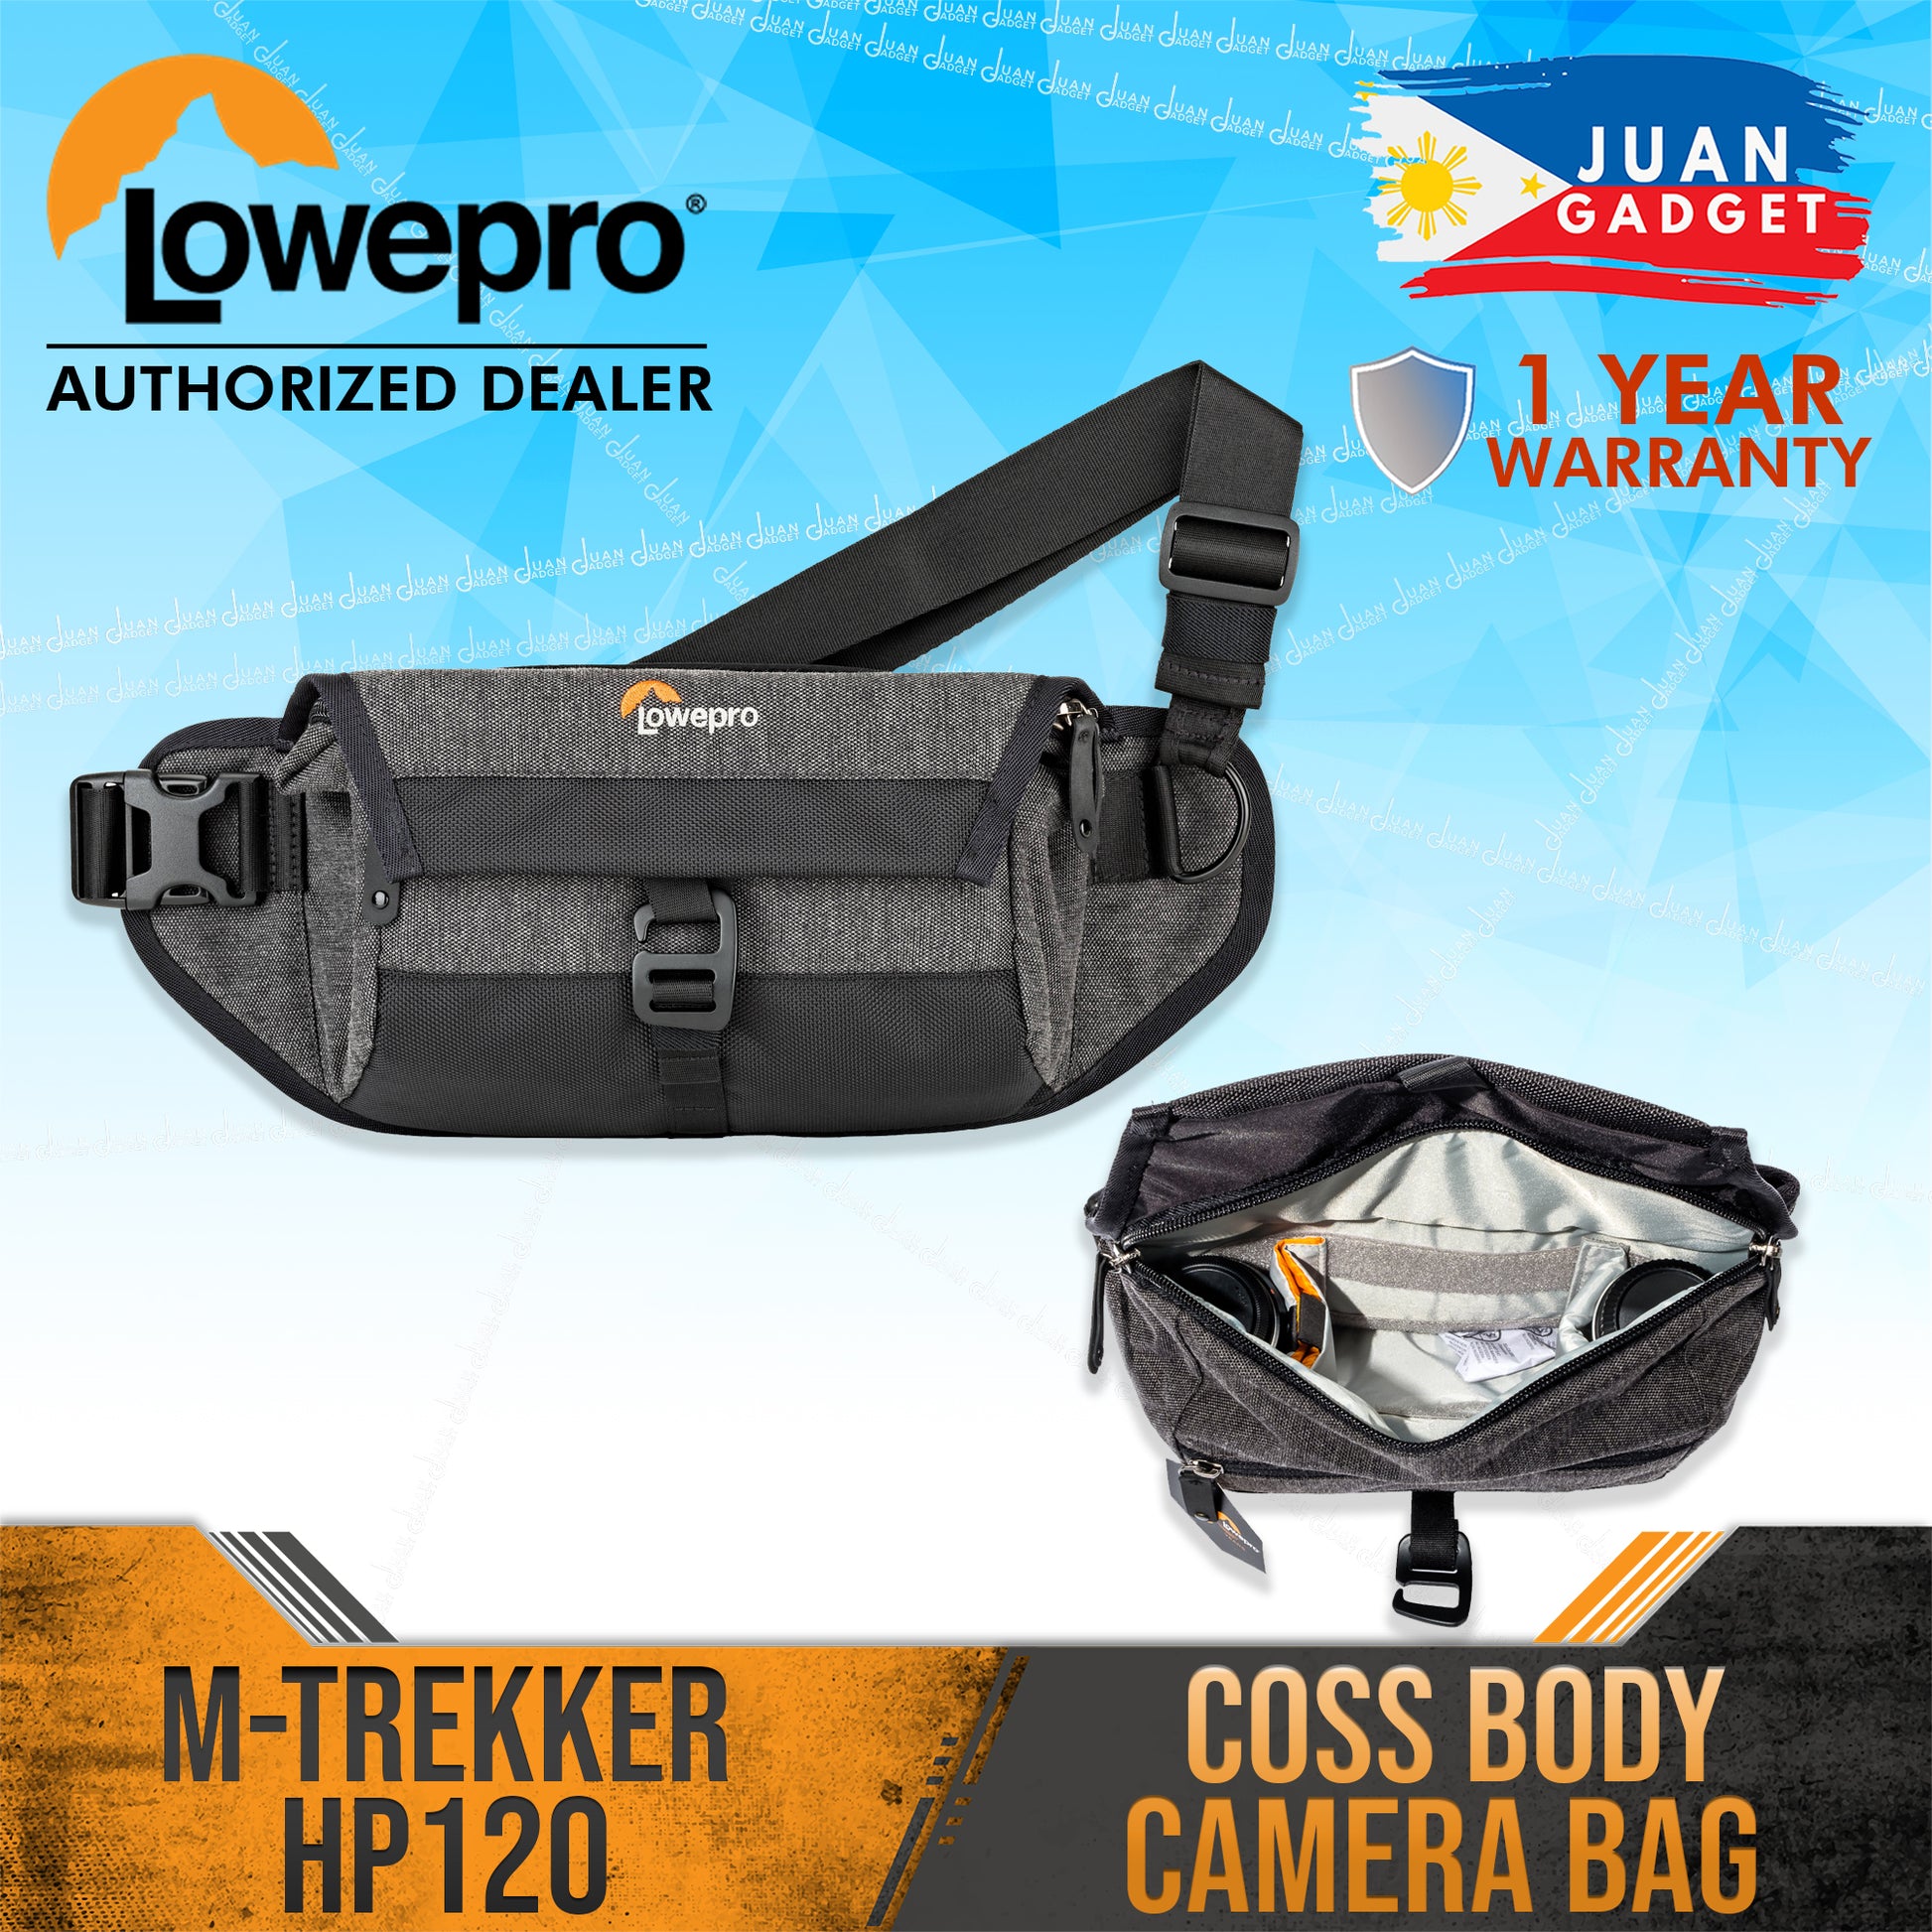 Lowepro m-Trekker HP120 WasitBag or Coss Body Camera Bag (Gray Canvex)